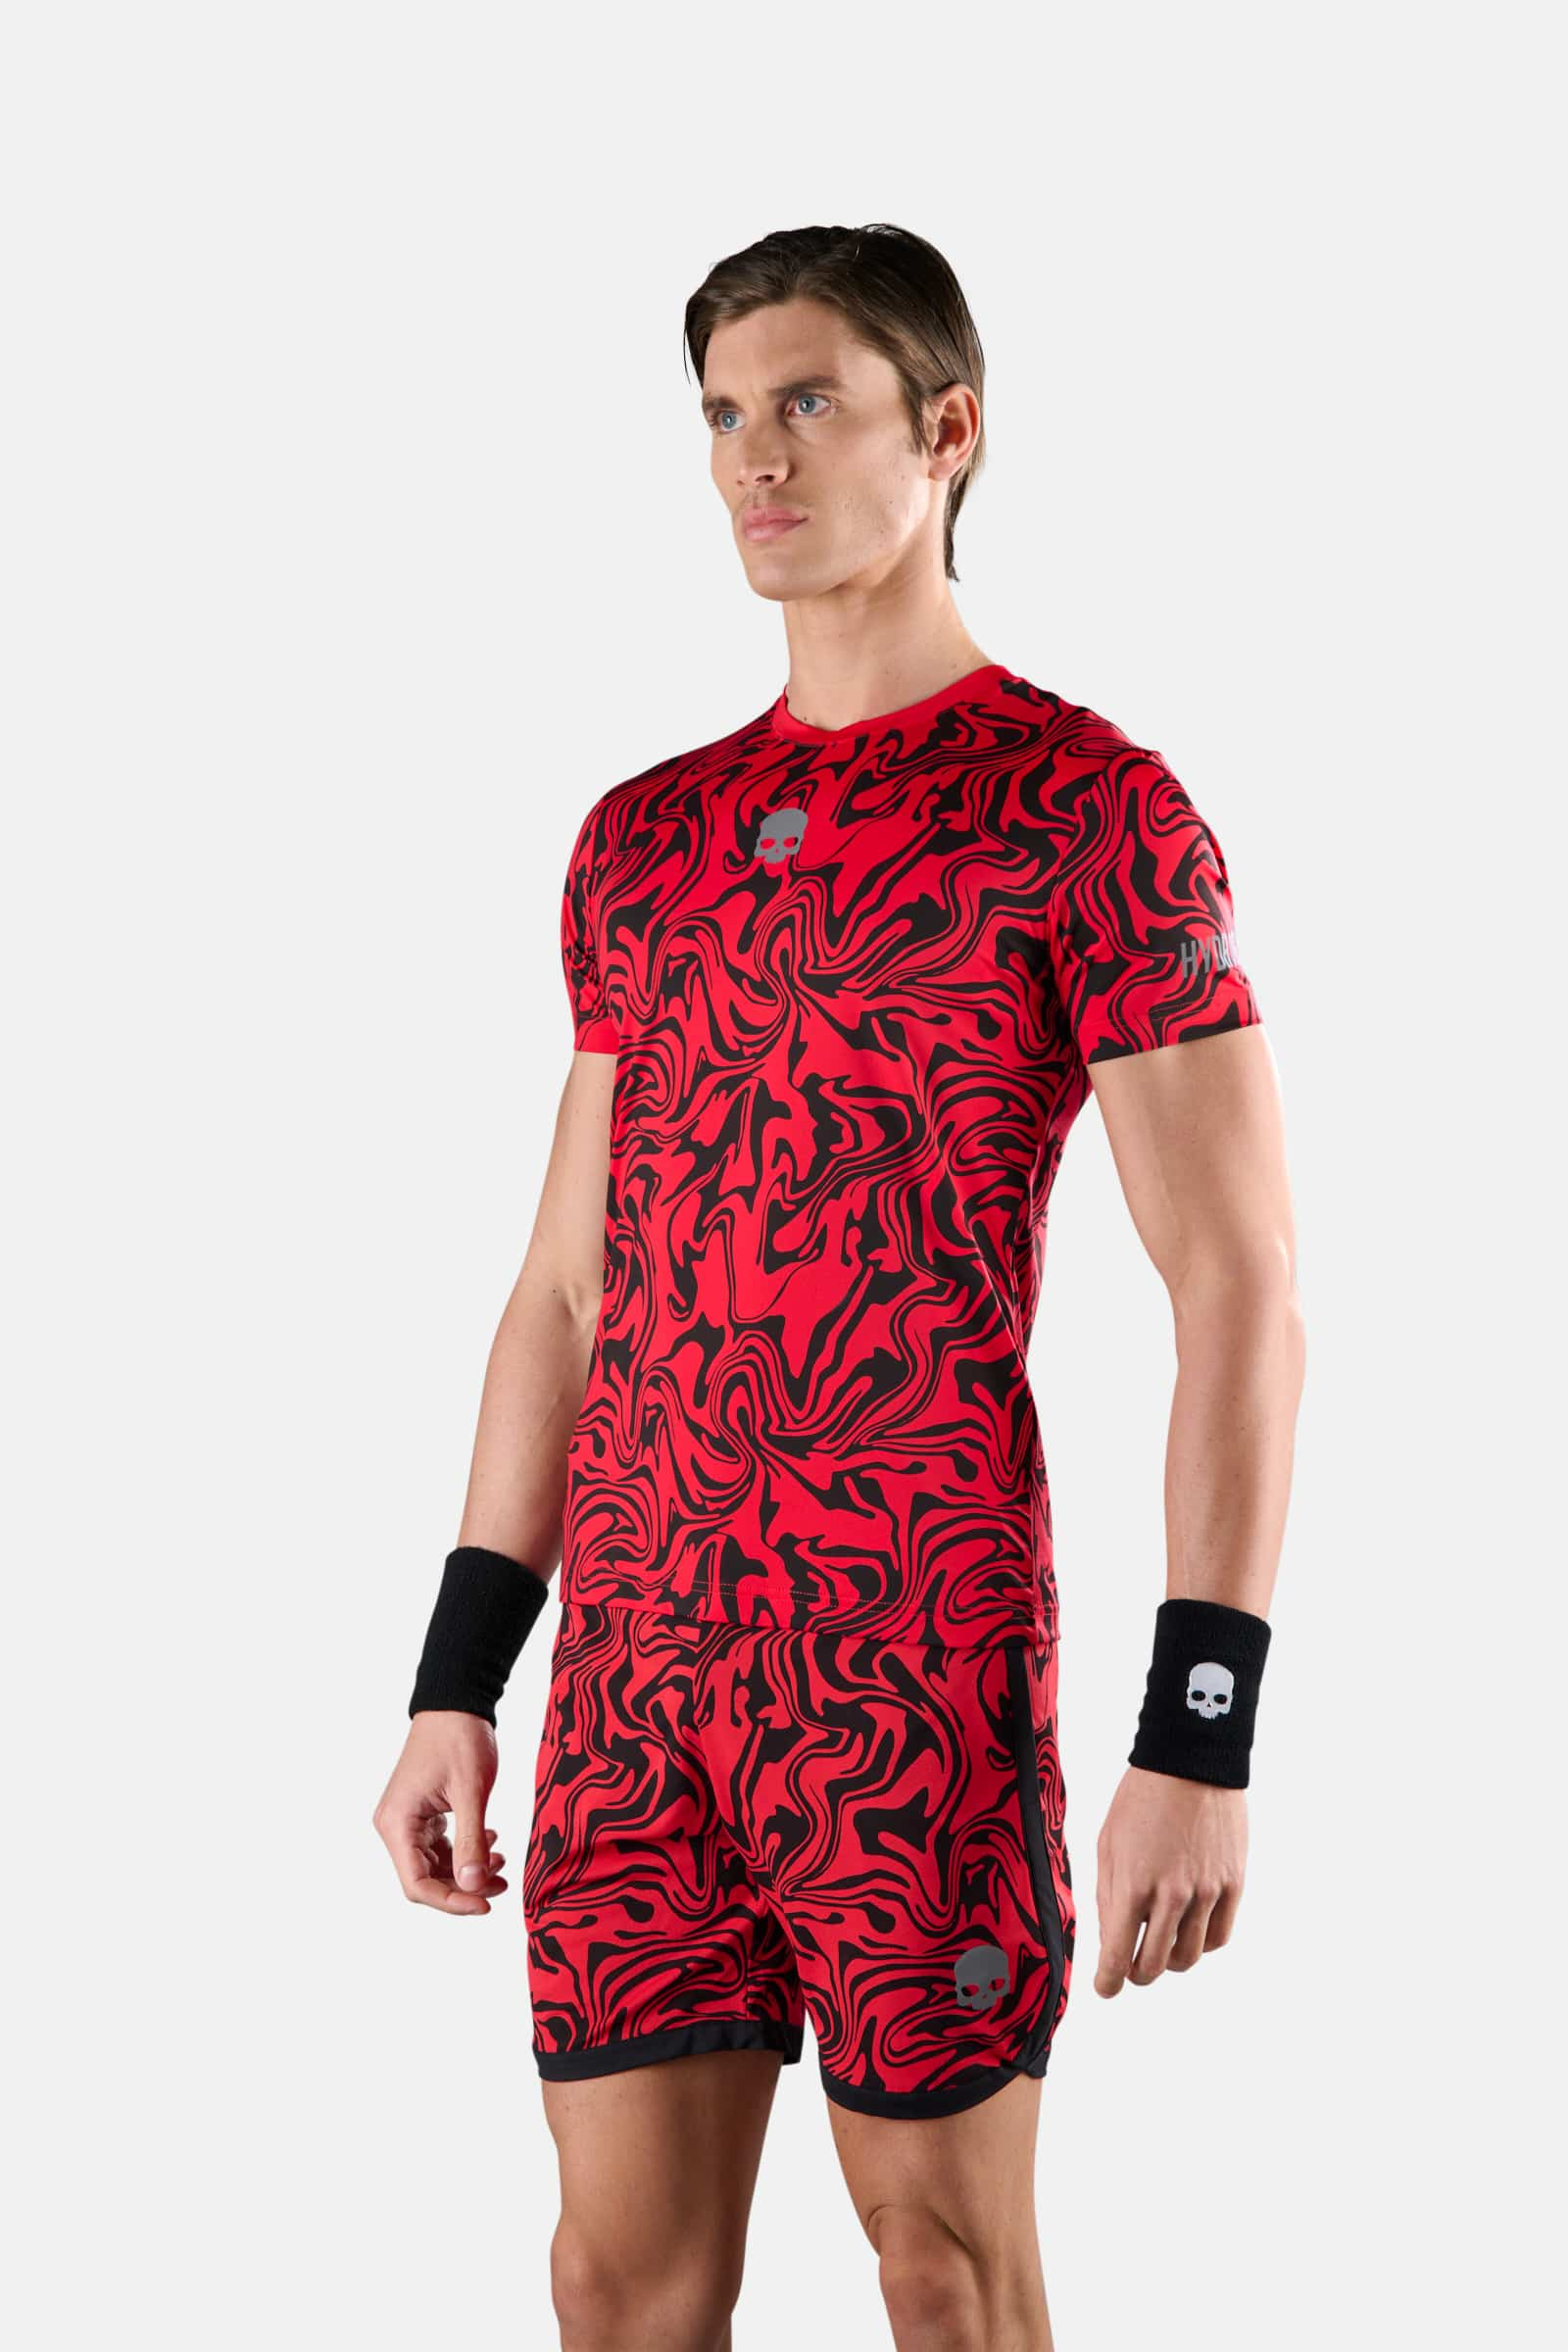 T-SHIRT TECNICA CHROME - RED - Abbigliamento sportivo | Hydrogen